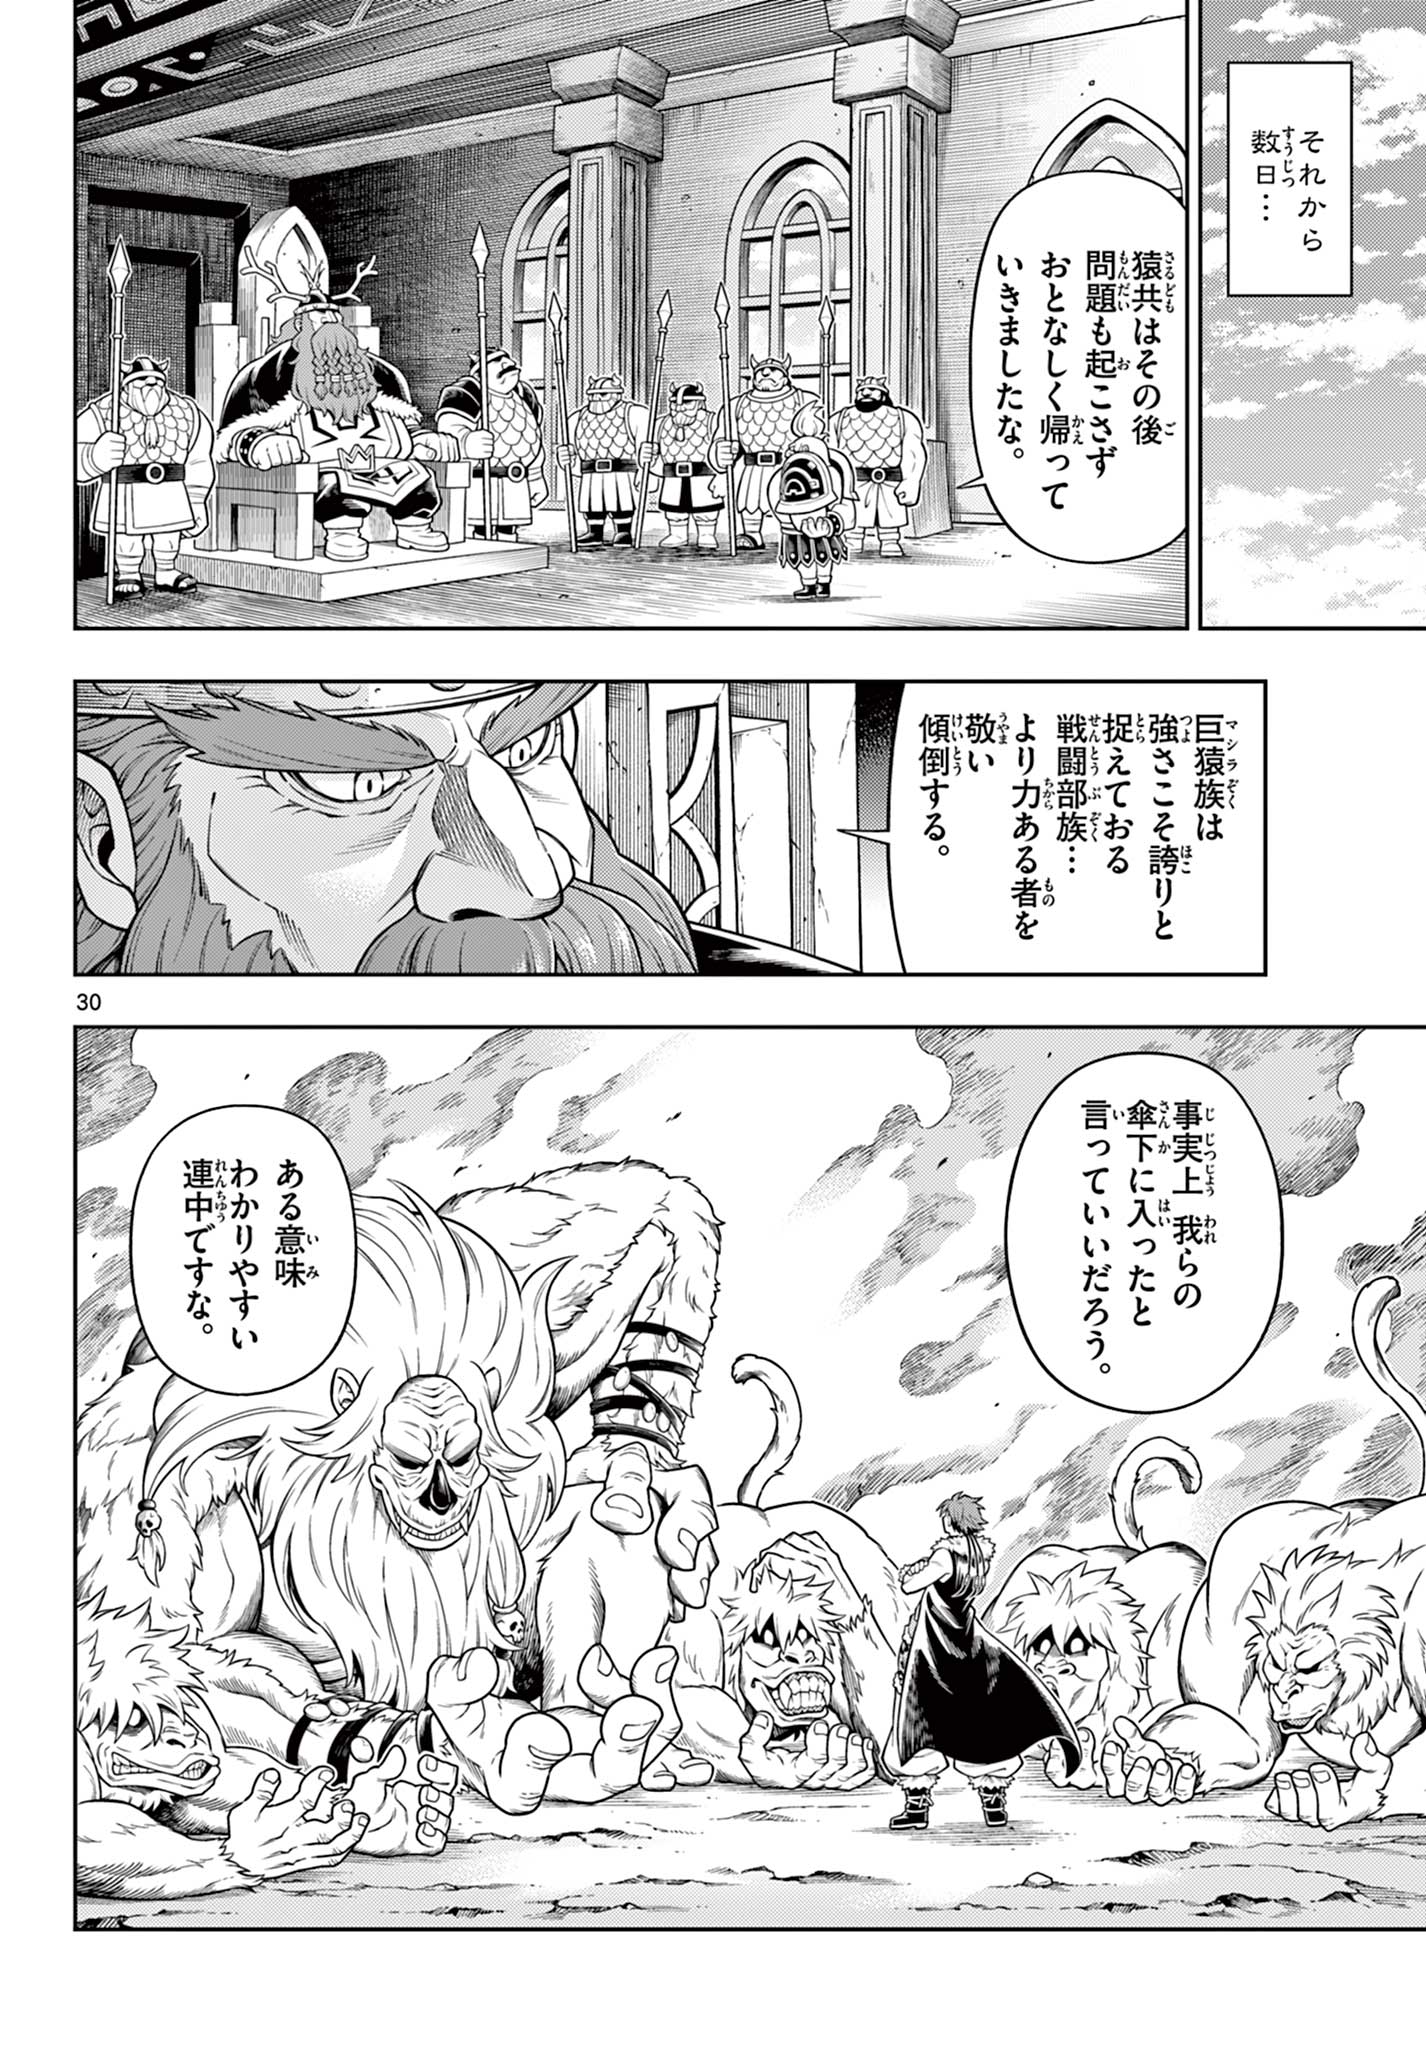 Soara to Mamono no ie - Chapter 24 - Page 30